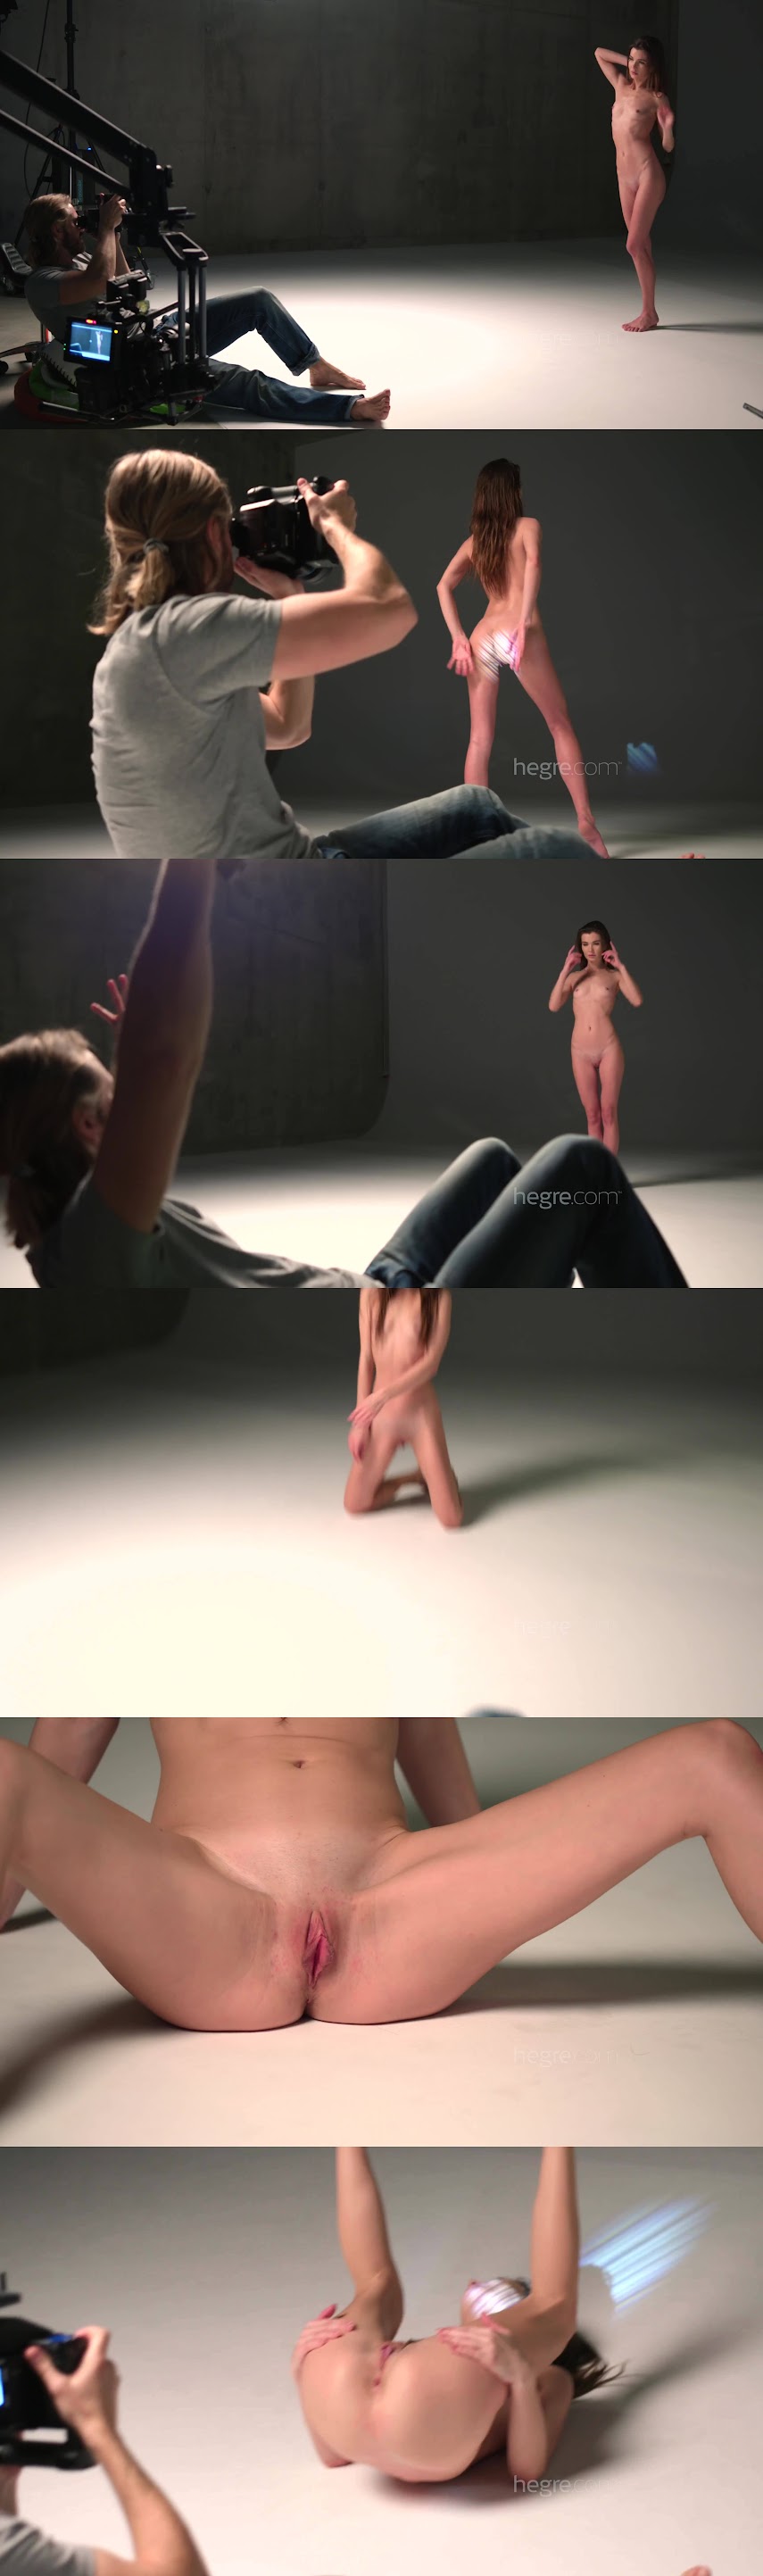 AV veronika v the art of nude photography 4k - idols